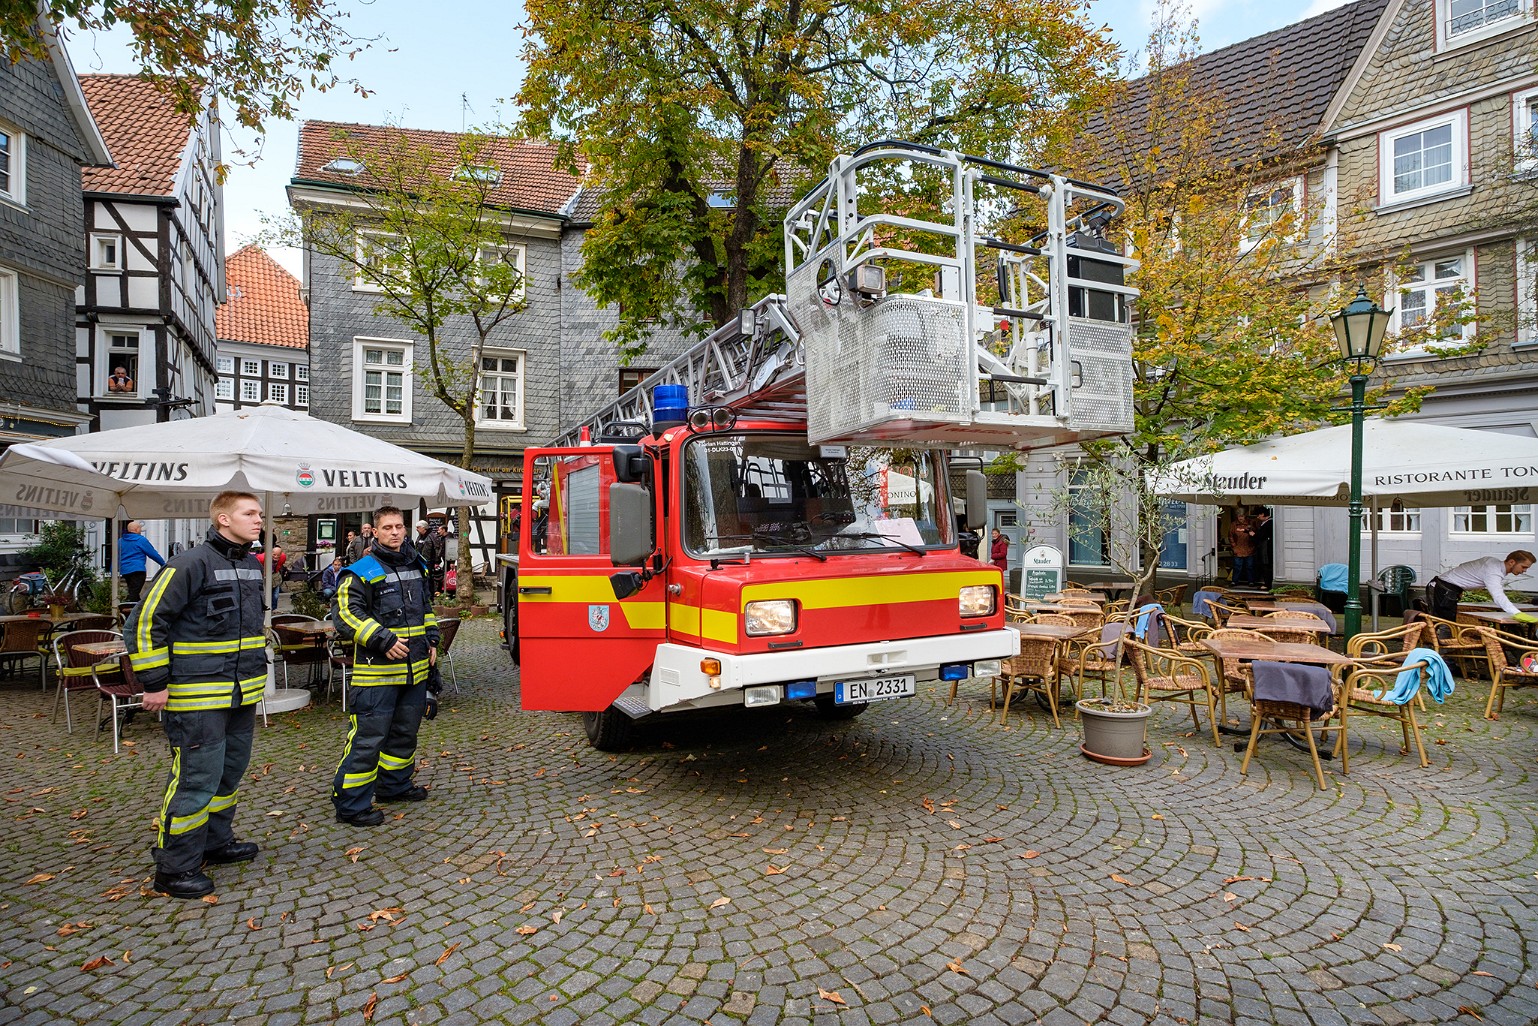 Kirchplatz_044_Feuerwehr-Hattingen_X-T2_11,5mm_-6,4_1-140_LR69_sRGB